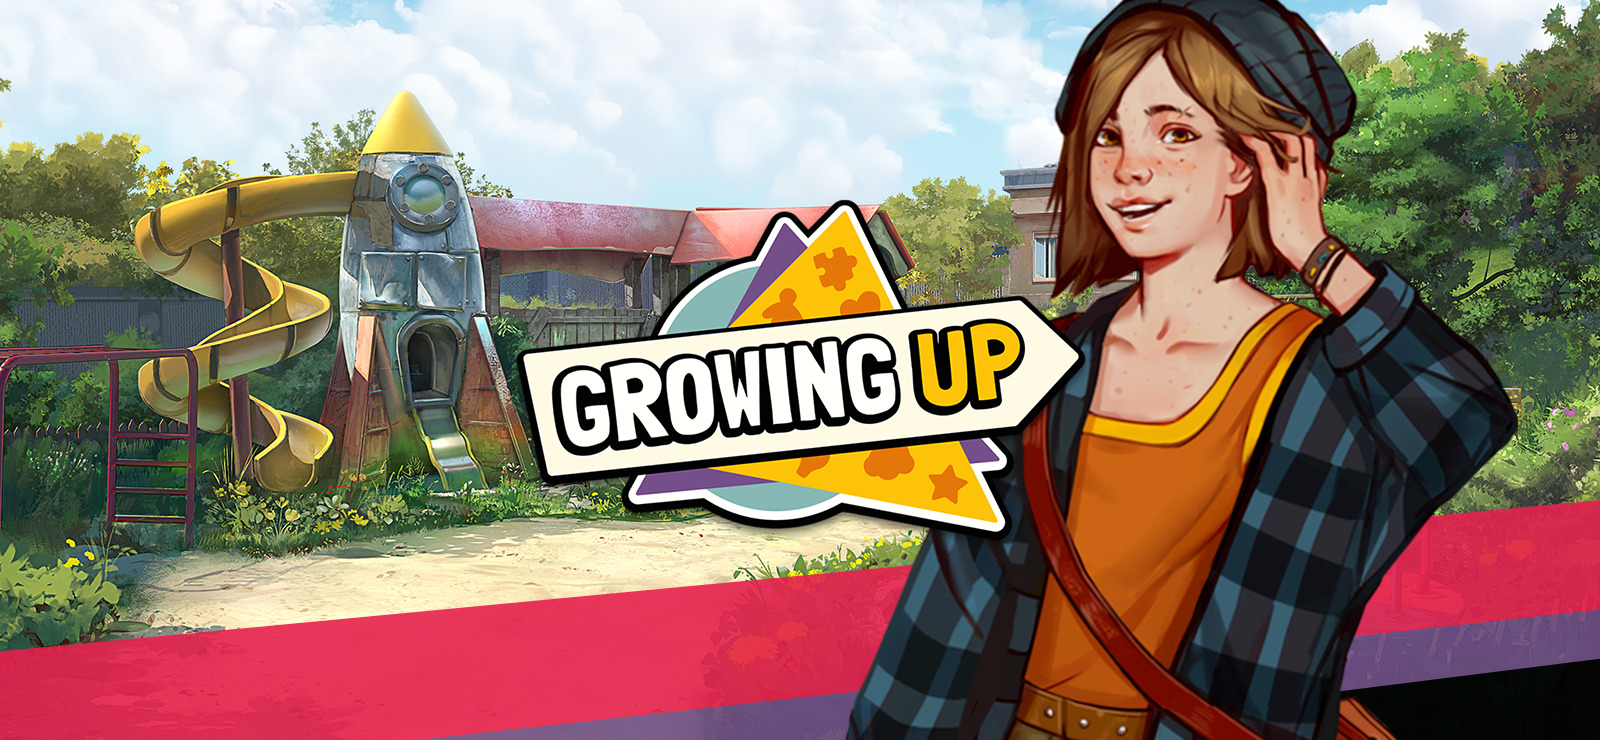 Grow Up - Life Simulator Game by Soofun Games